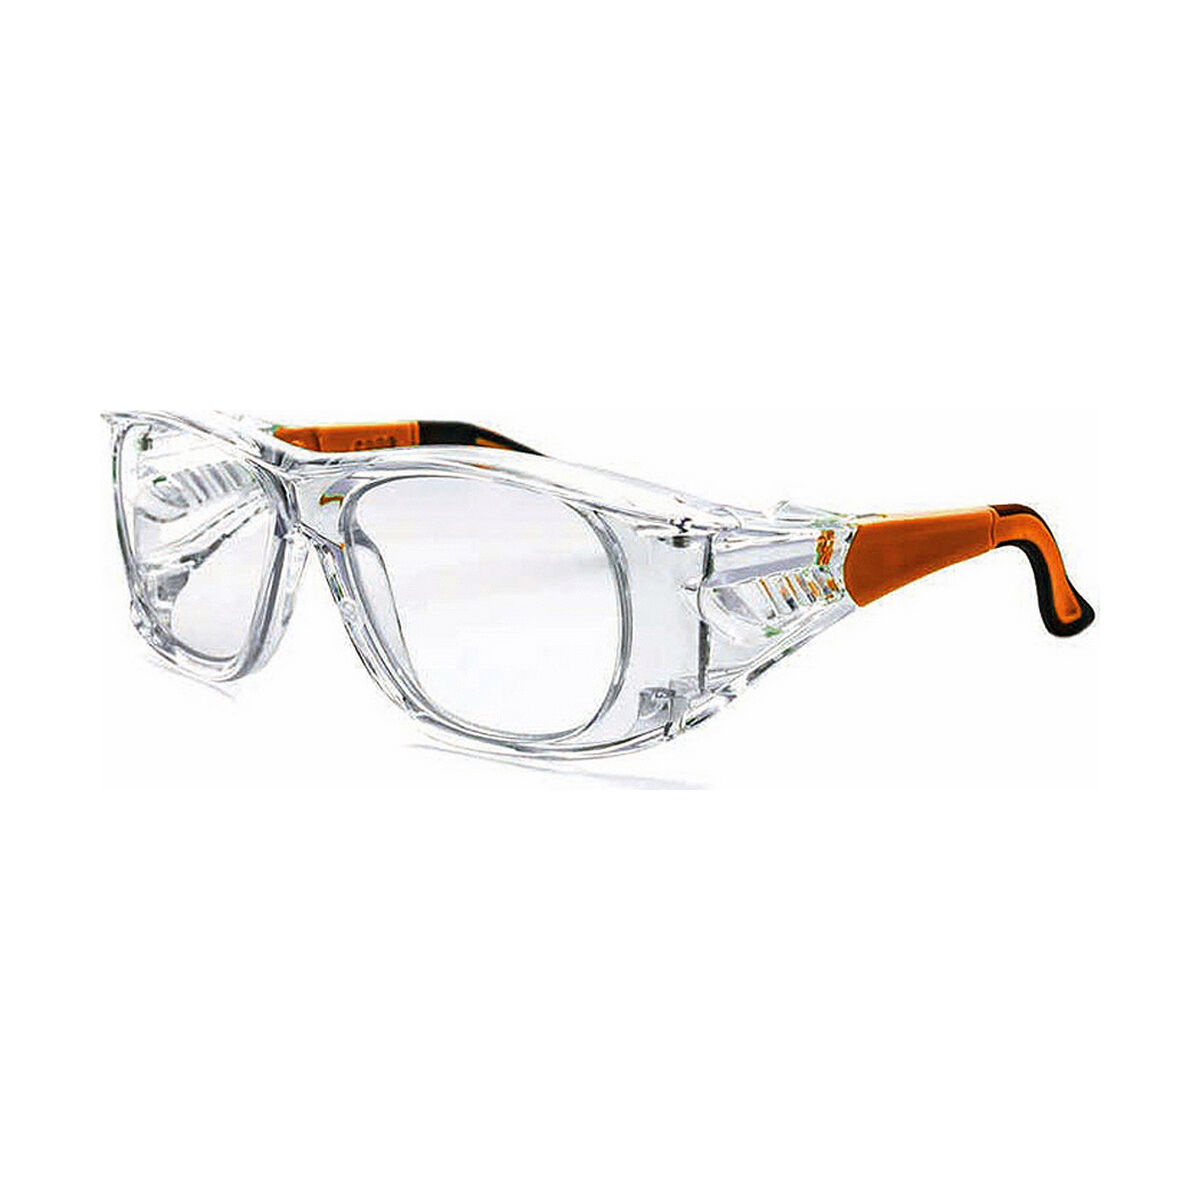 Occhiali Protettivi Varionet Safetypro 350 V2 Arancio